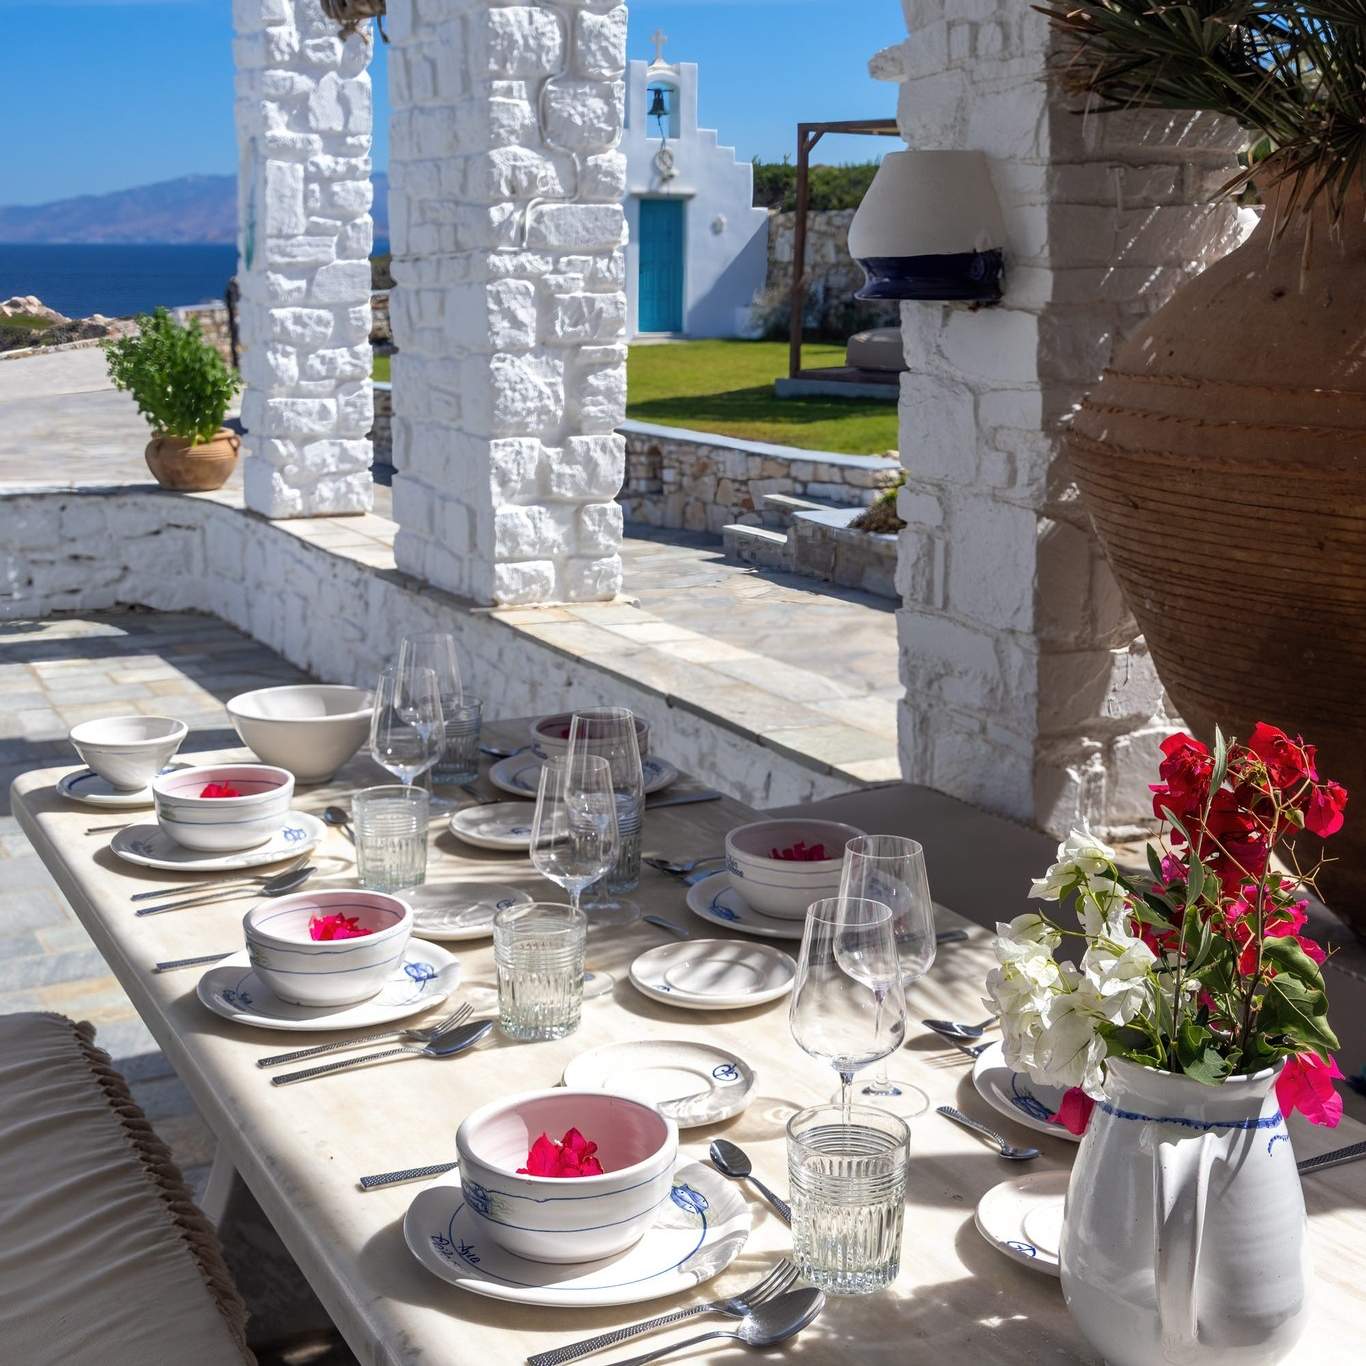 Agia Thalassa. Escape to paradise where the crystal-clear waters of the Aegean Sea meet a luxurious, contemporary villa that's perfect for a dreamy getaway. ✨
.
#amalgamhomes #artofcomfort #greece #visitgreece #greekislands #cyclades #greekislands #paros #naxos #mykonos #tinos #ampelas #kastraki #triantaros #travel #wanderlust #greeksummer #discovergreece